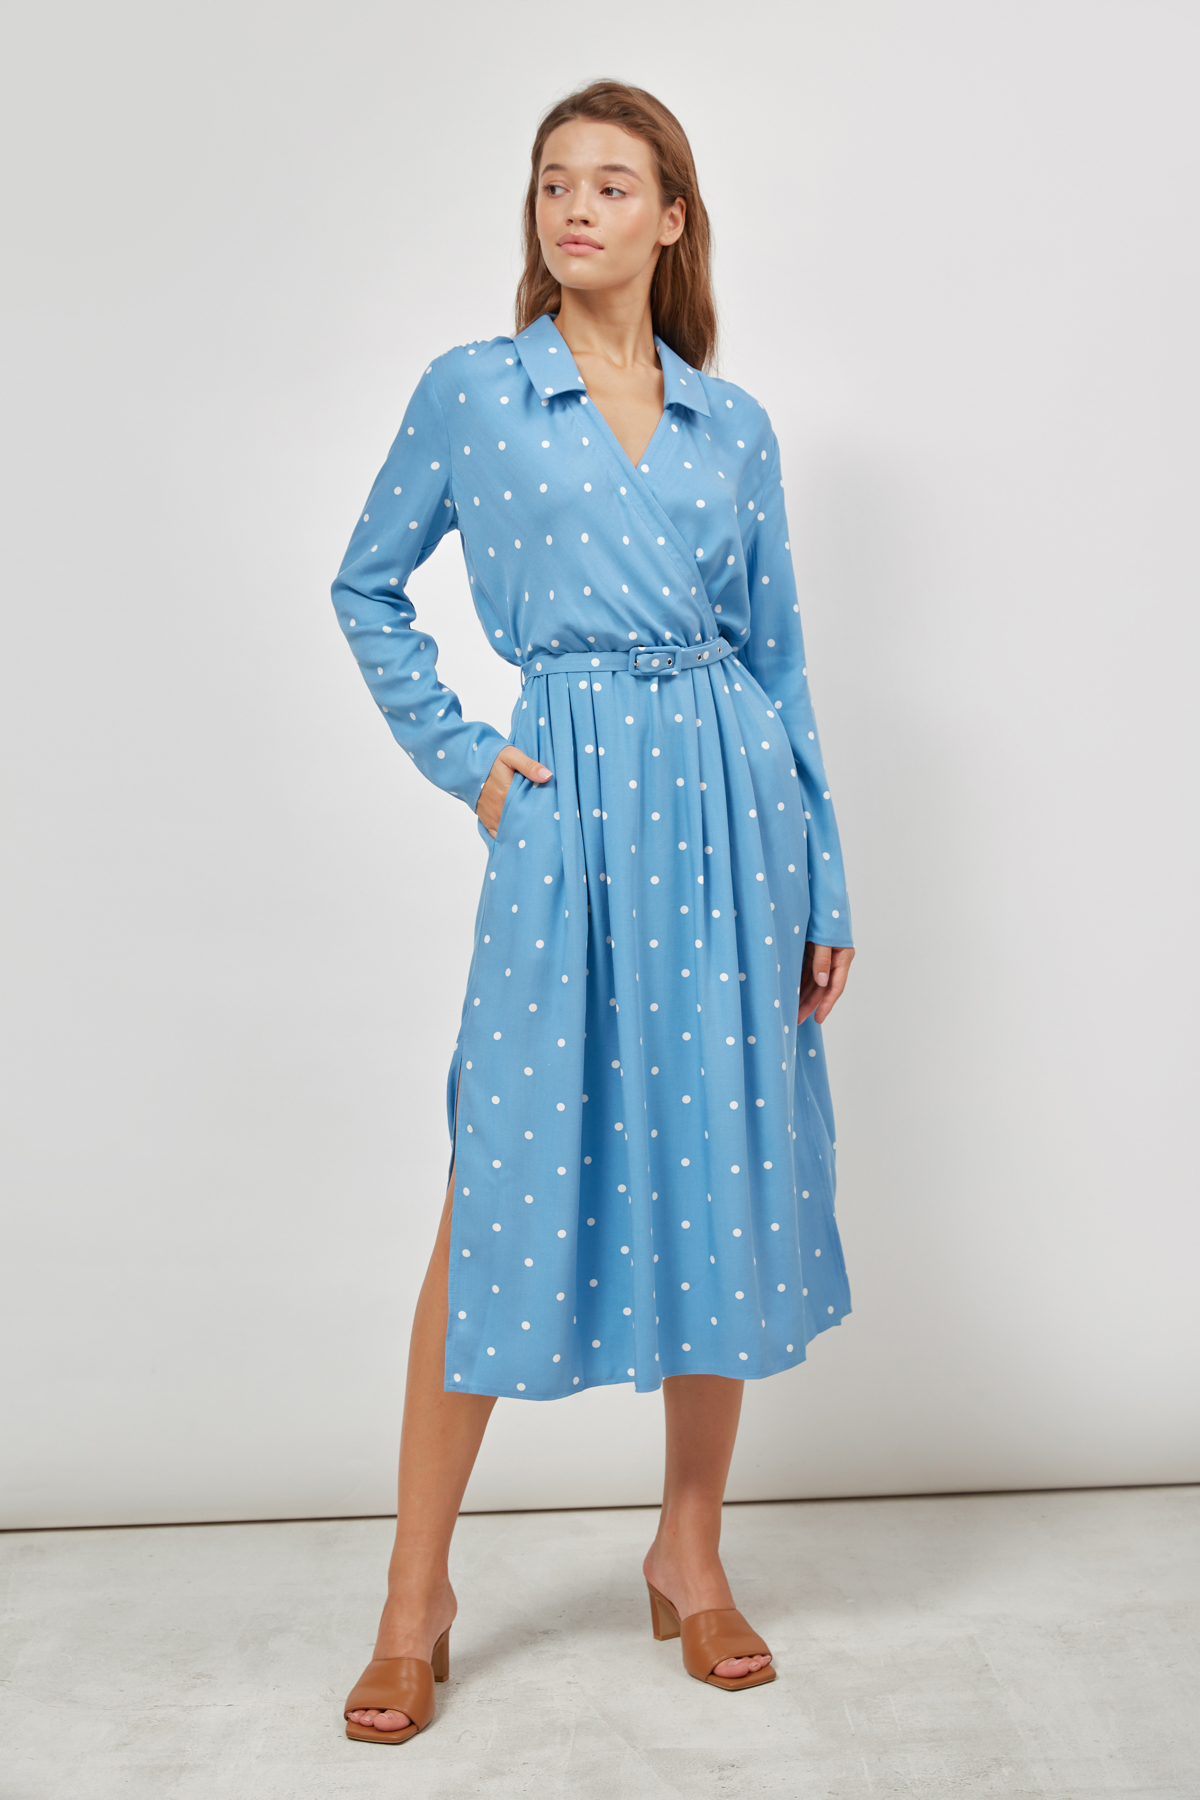 Blue viscose midi dress with white polka dots, photo 1